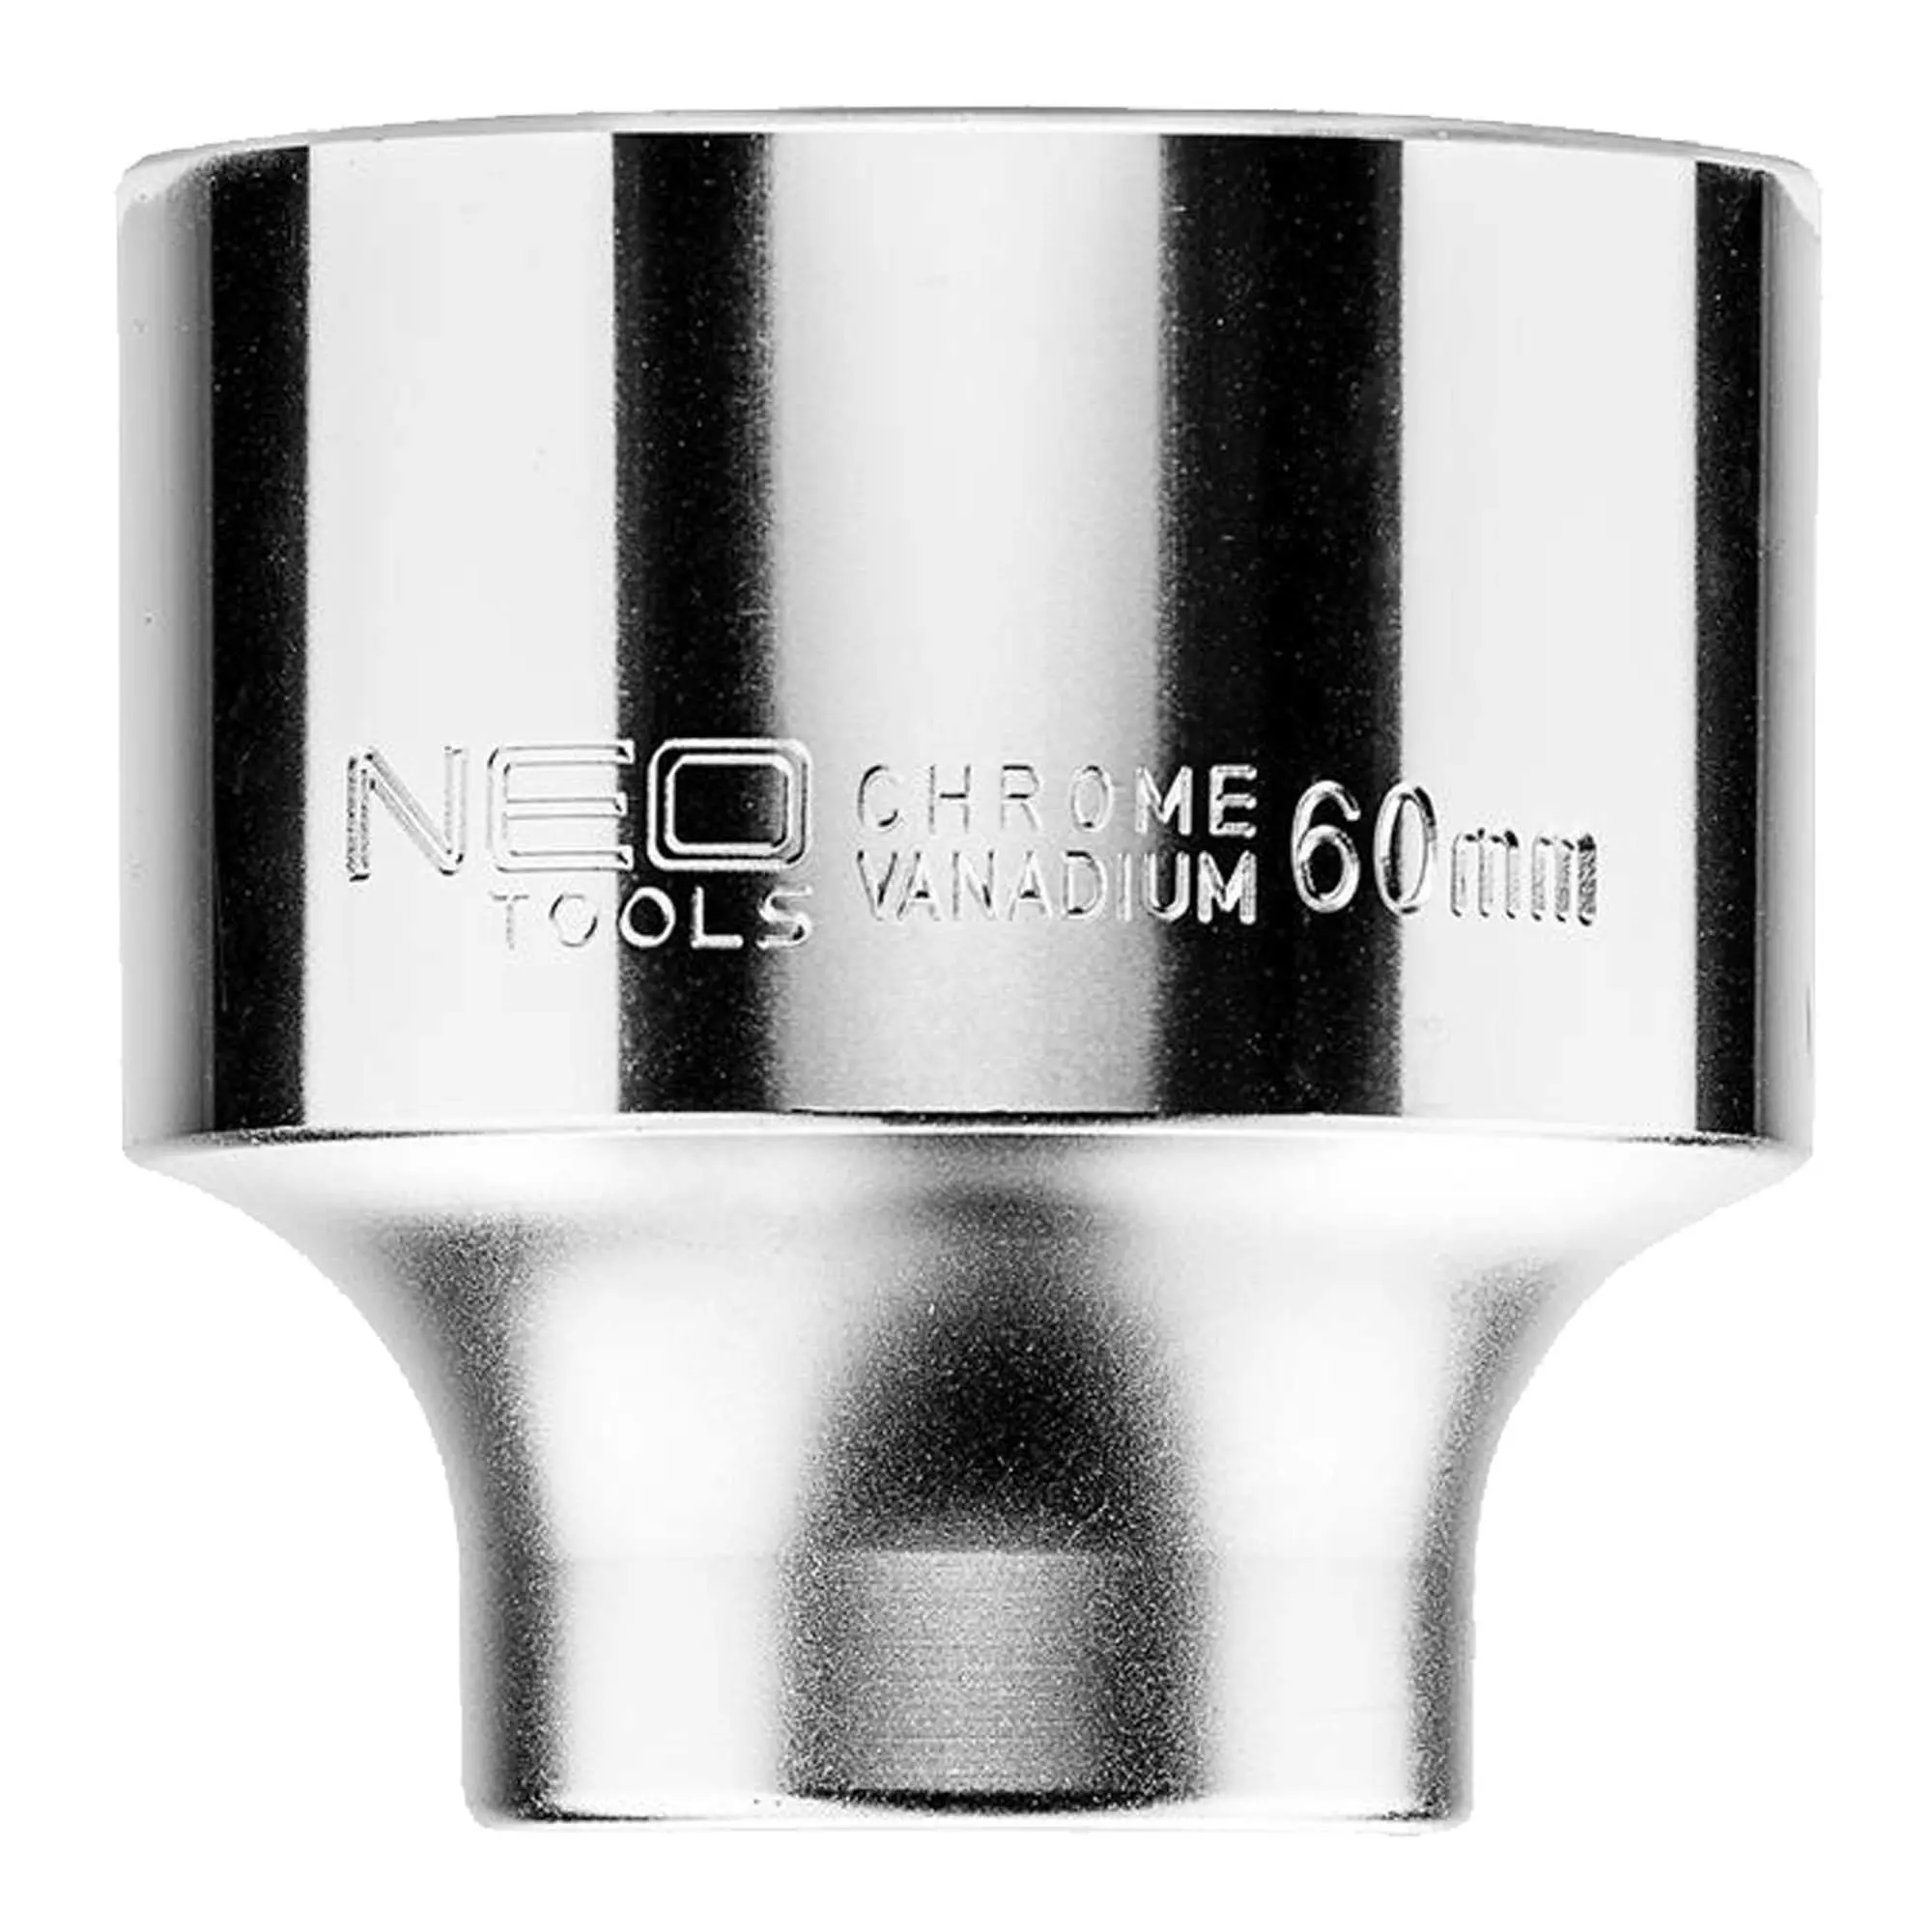 Головка змінна NEO TOOLS 6-гранна 33/4" 60 мм (08-341)